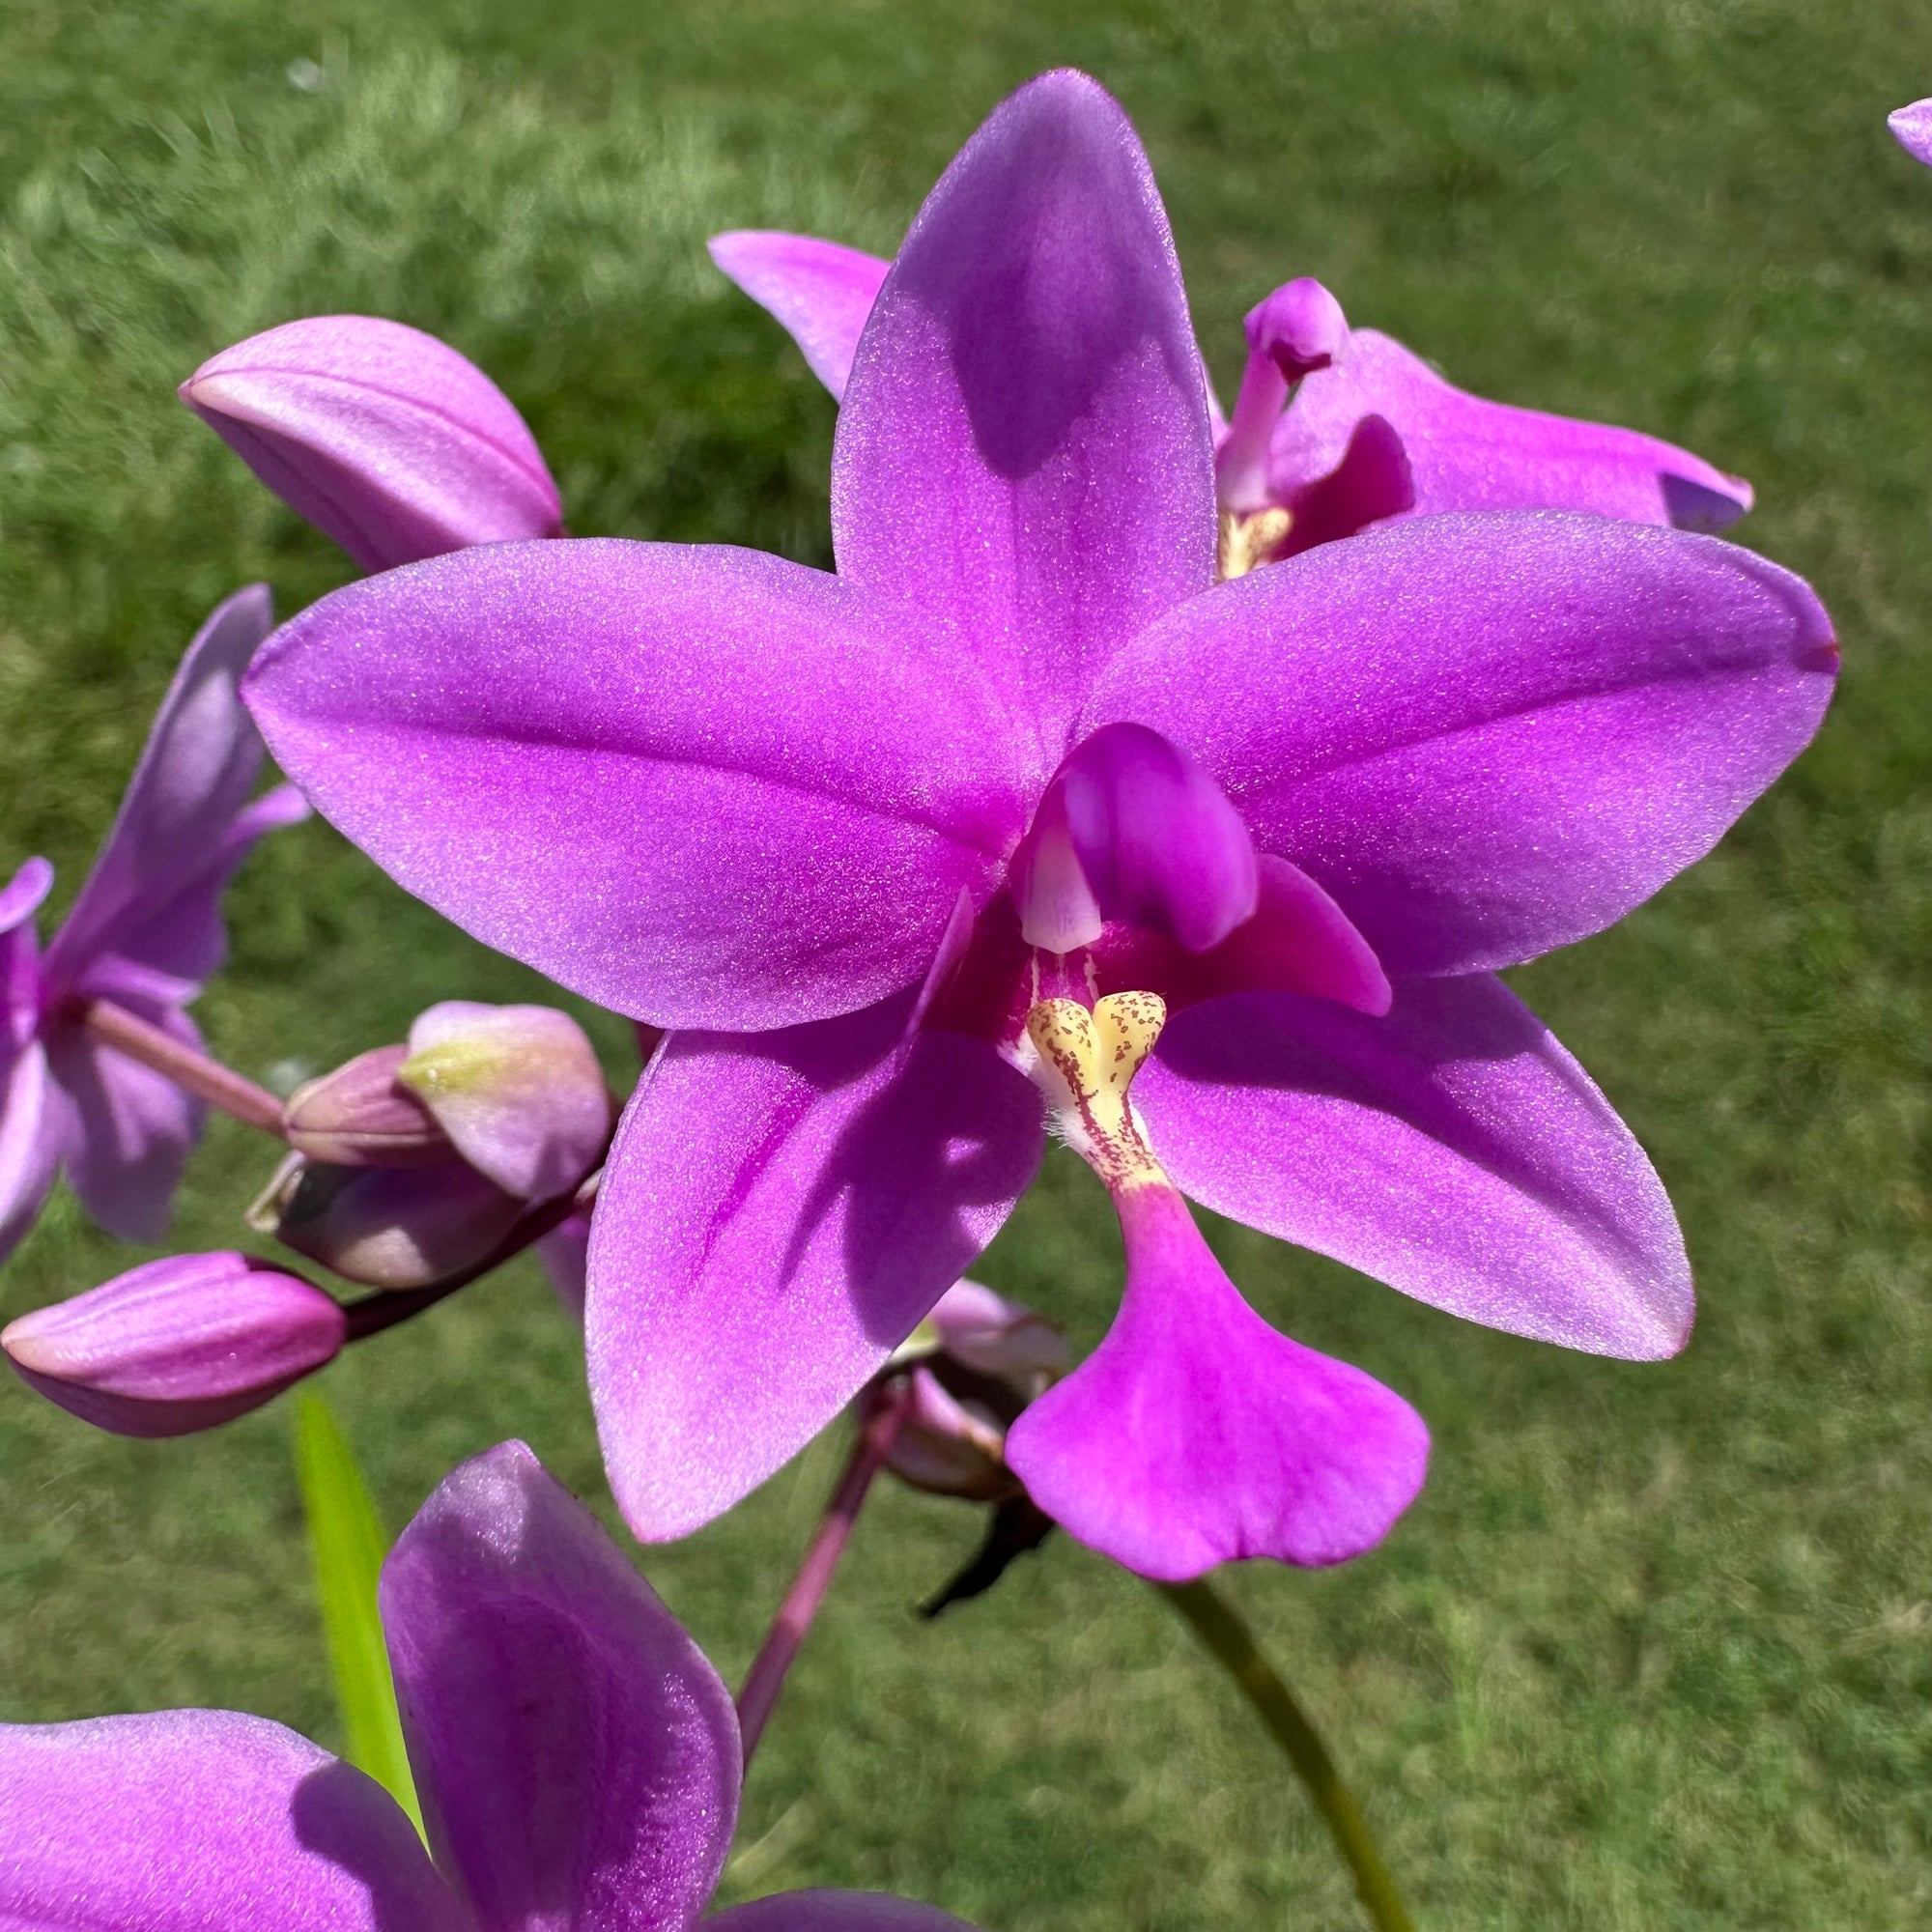 Orchid - Spathoglottis plicata NEW